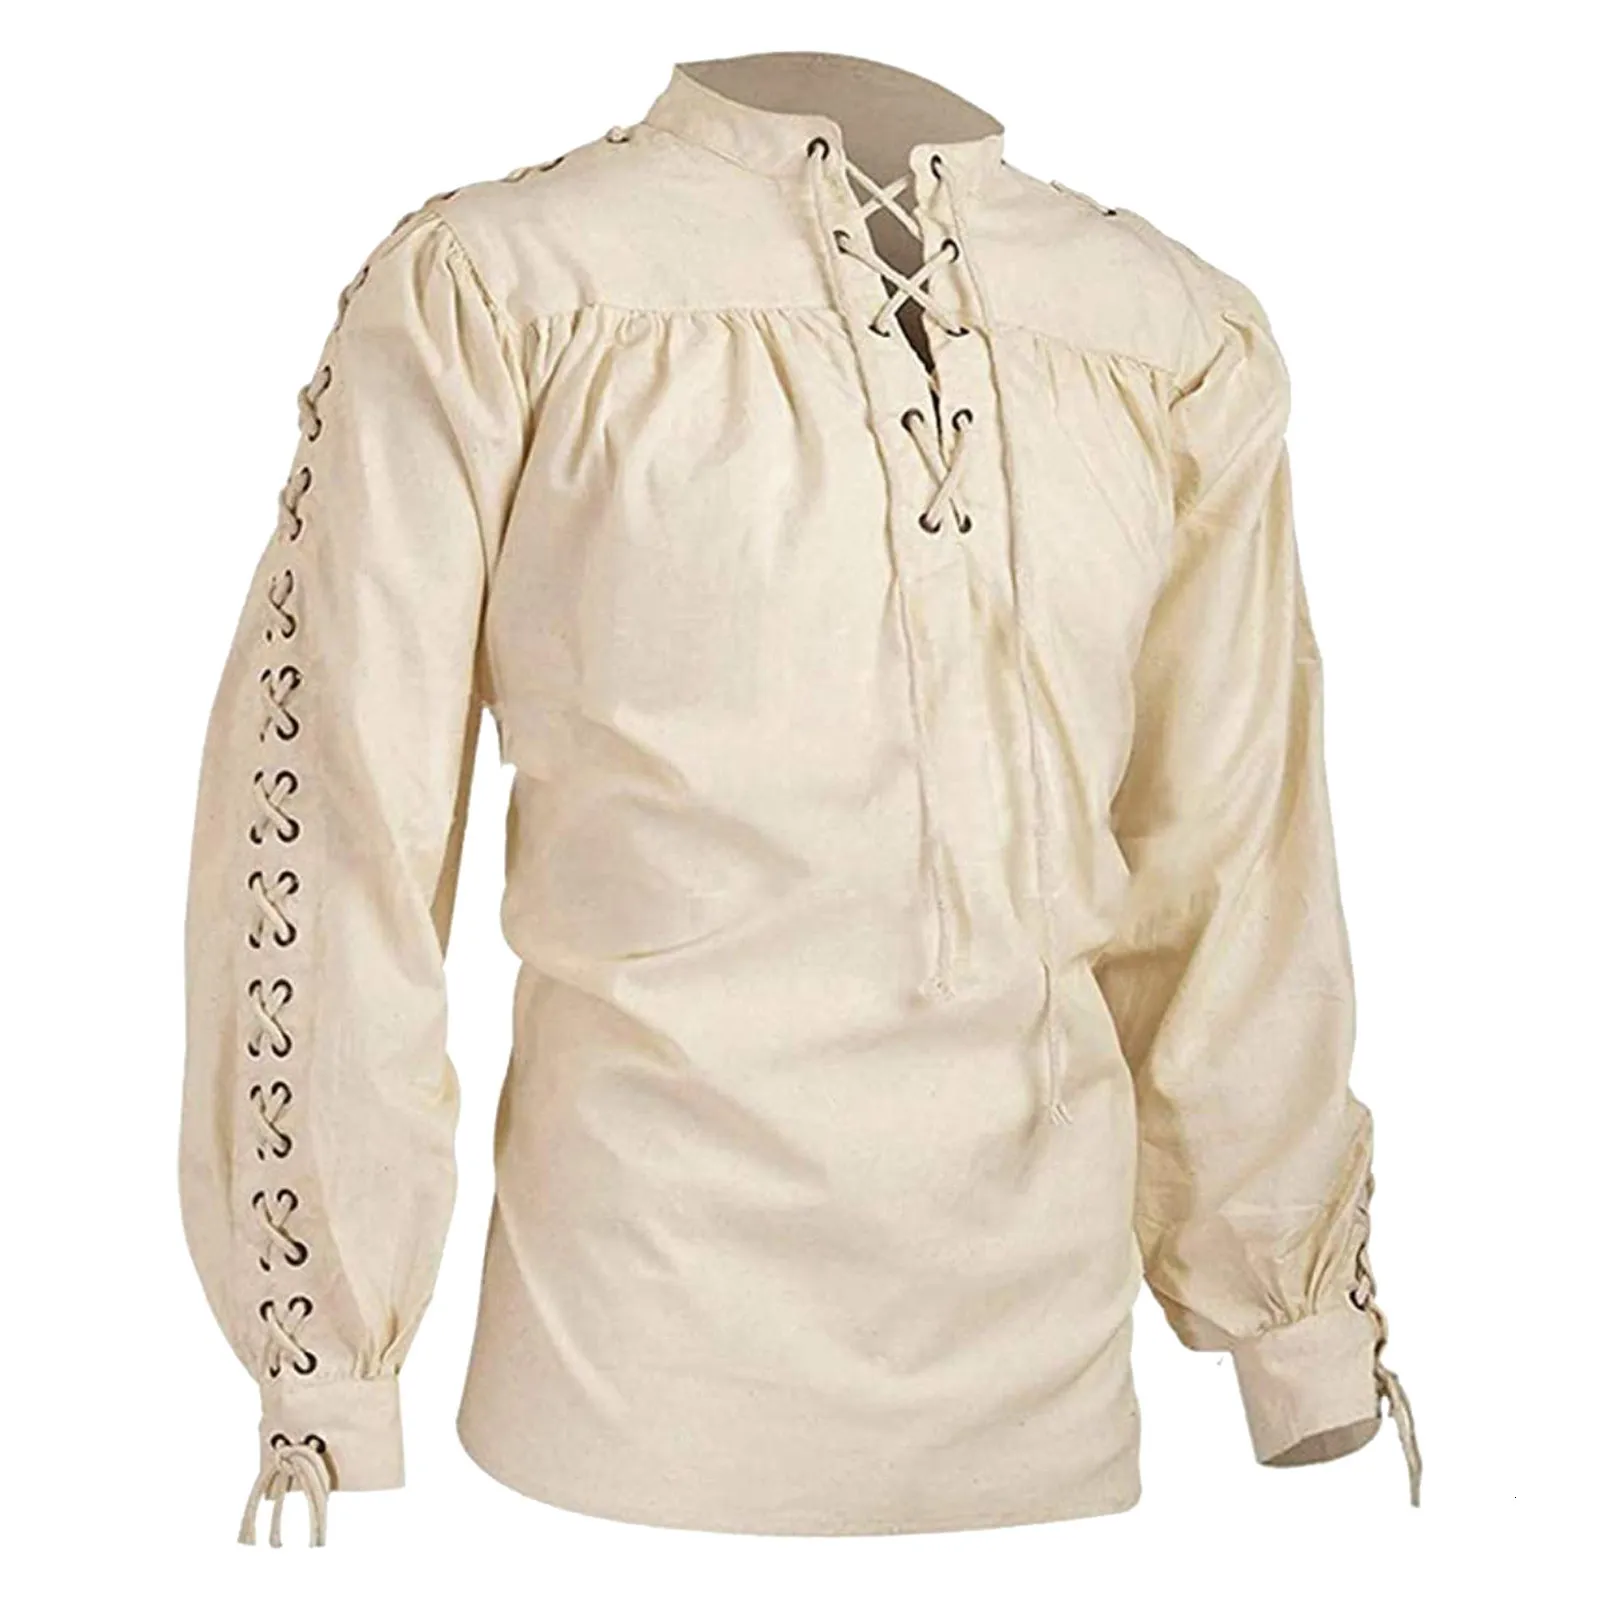 Camisas de vestido masculinas Medieval Homens Túnica Pirata Traje Gótico Roupas Vintage Camisa Ruffle Decote Cordão Cavaleiro Cosplay Halloween 230828